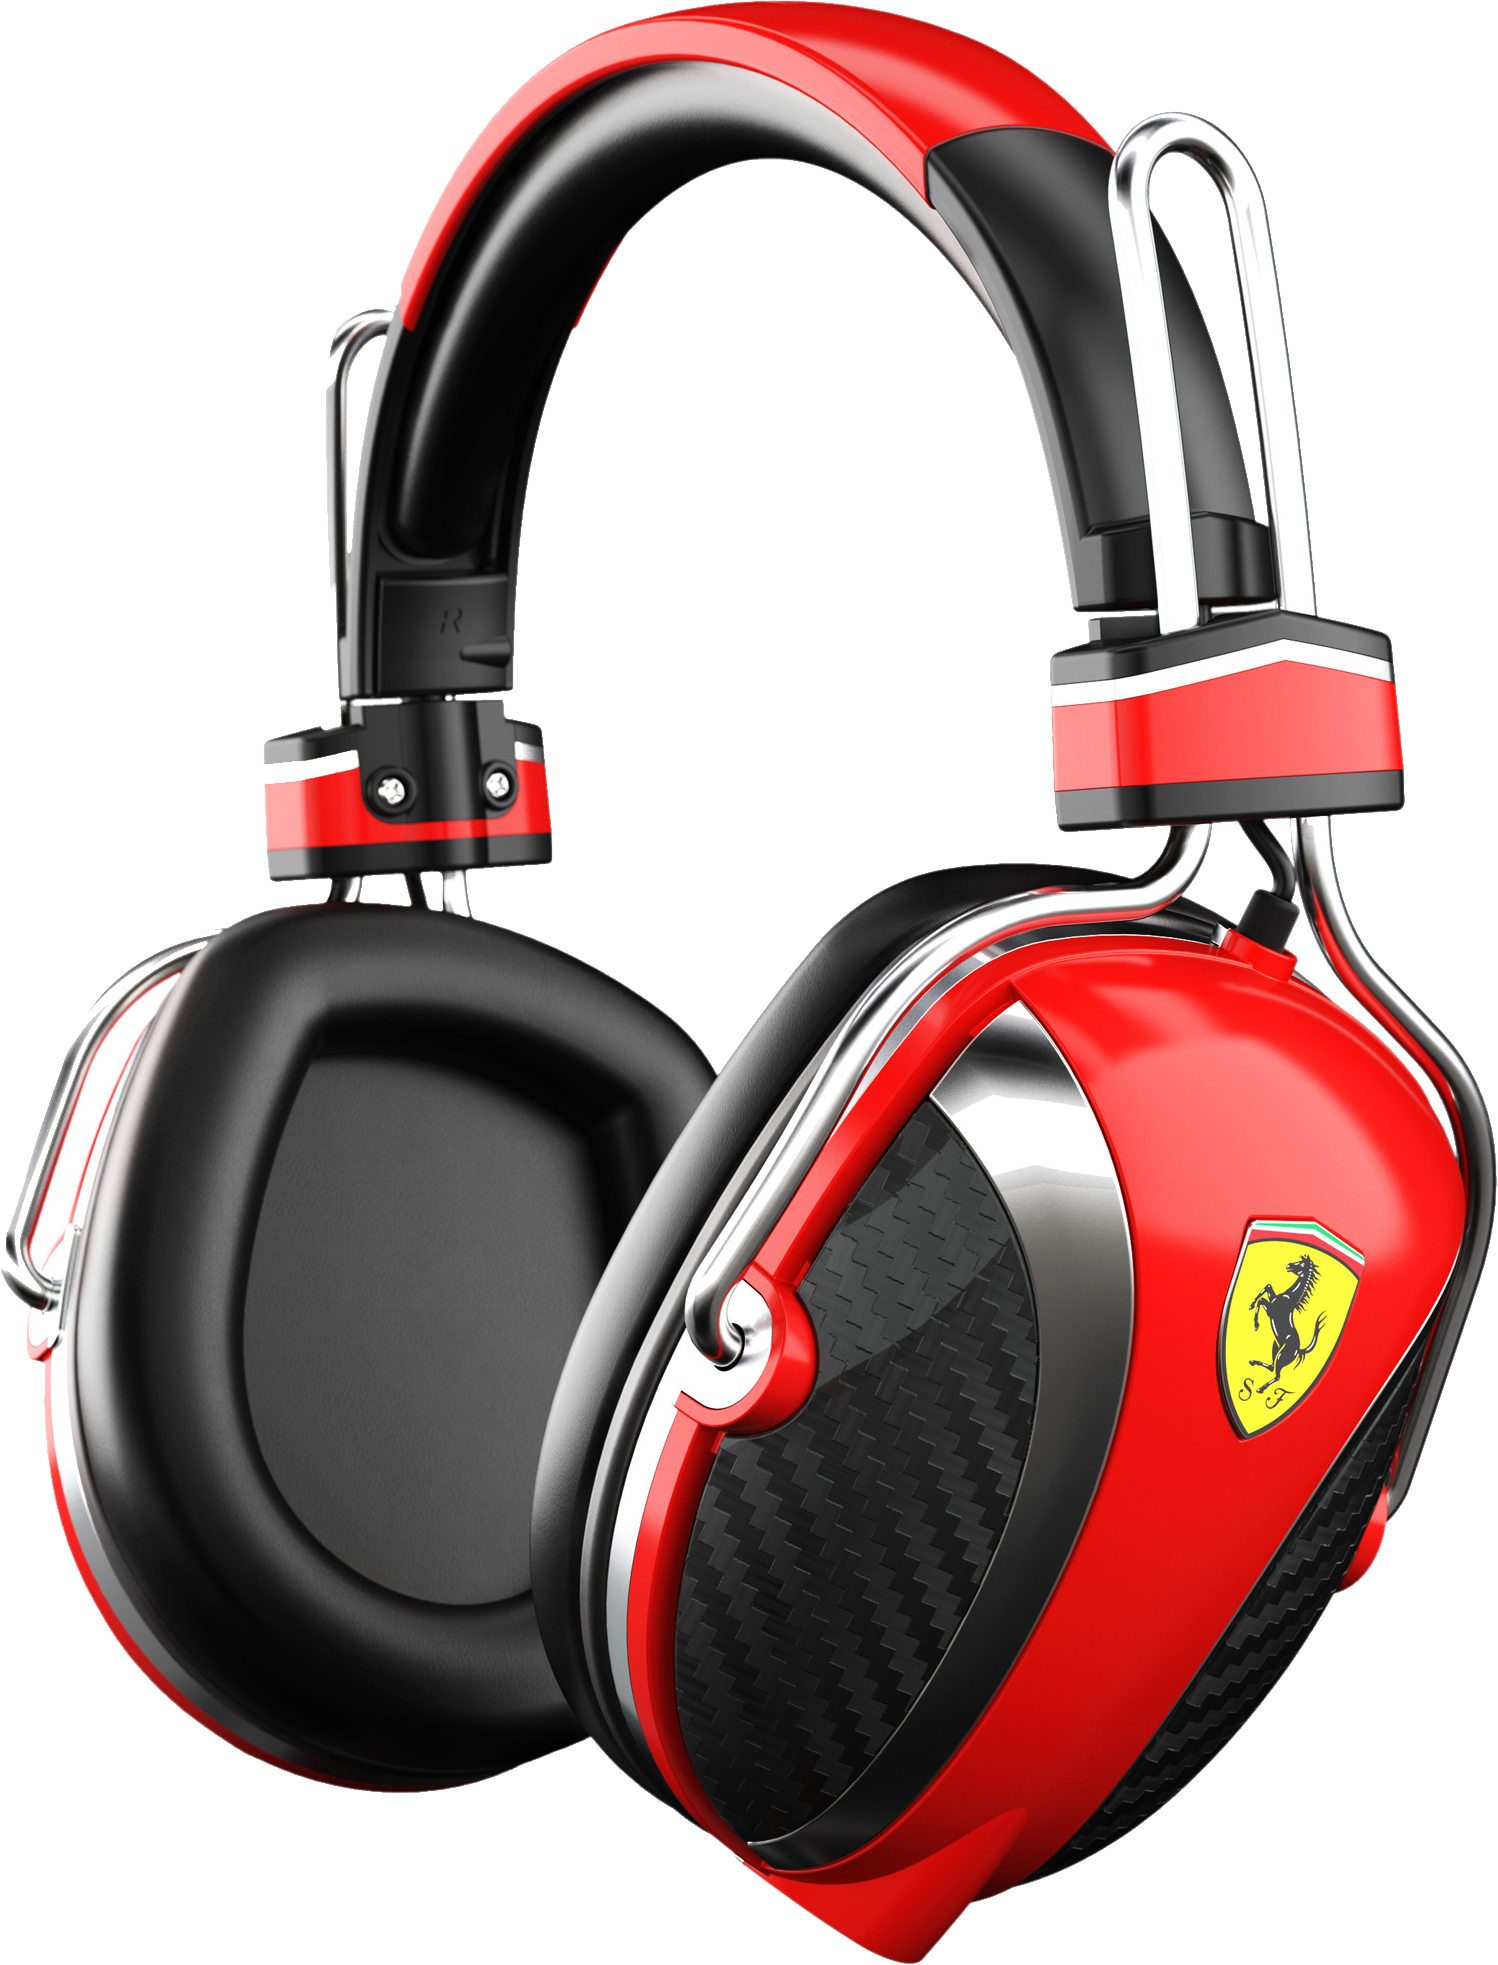 Redand Black Headphones PNG image